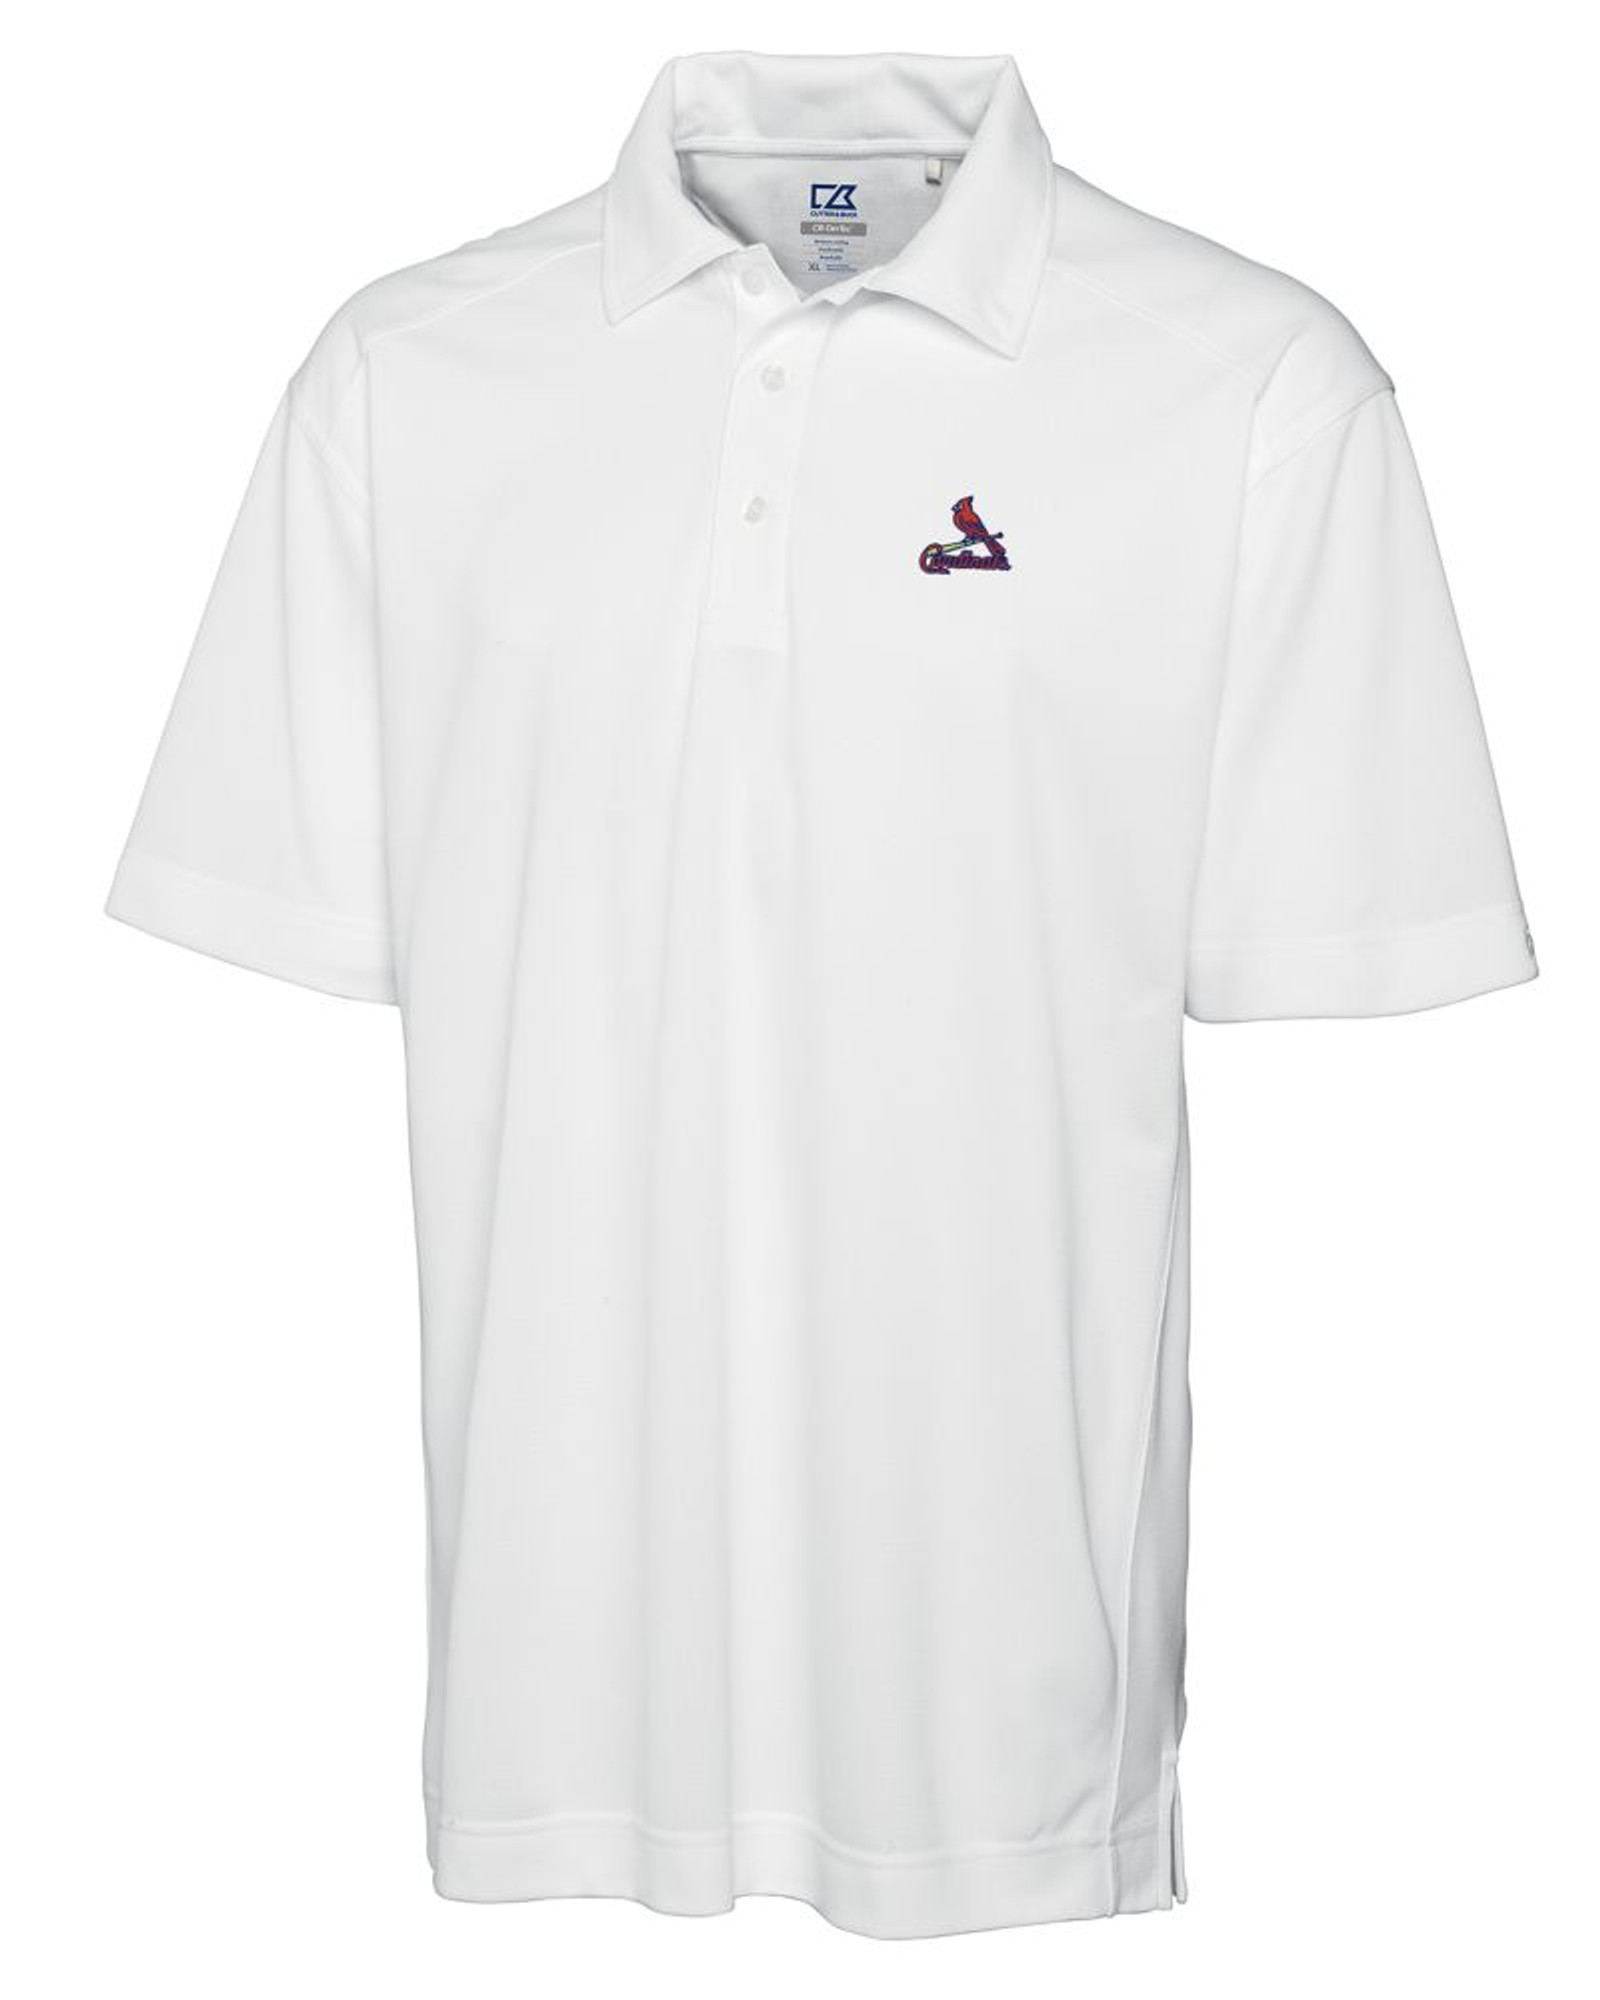 St. Louis Cardinals Mens Polo, Cardinals Polos, Golf Shirts